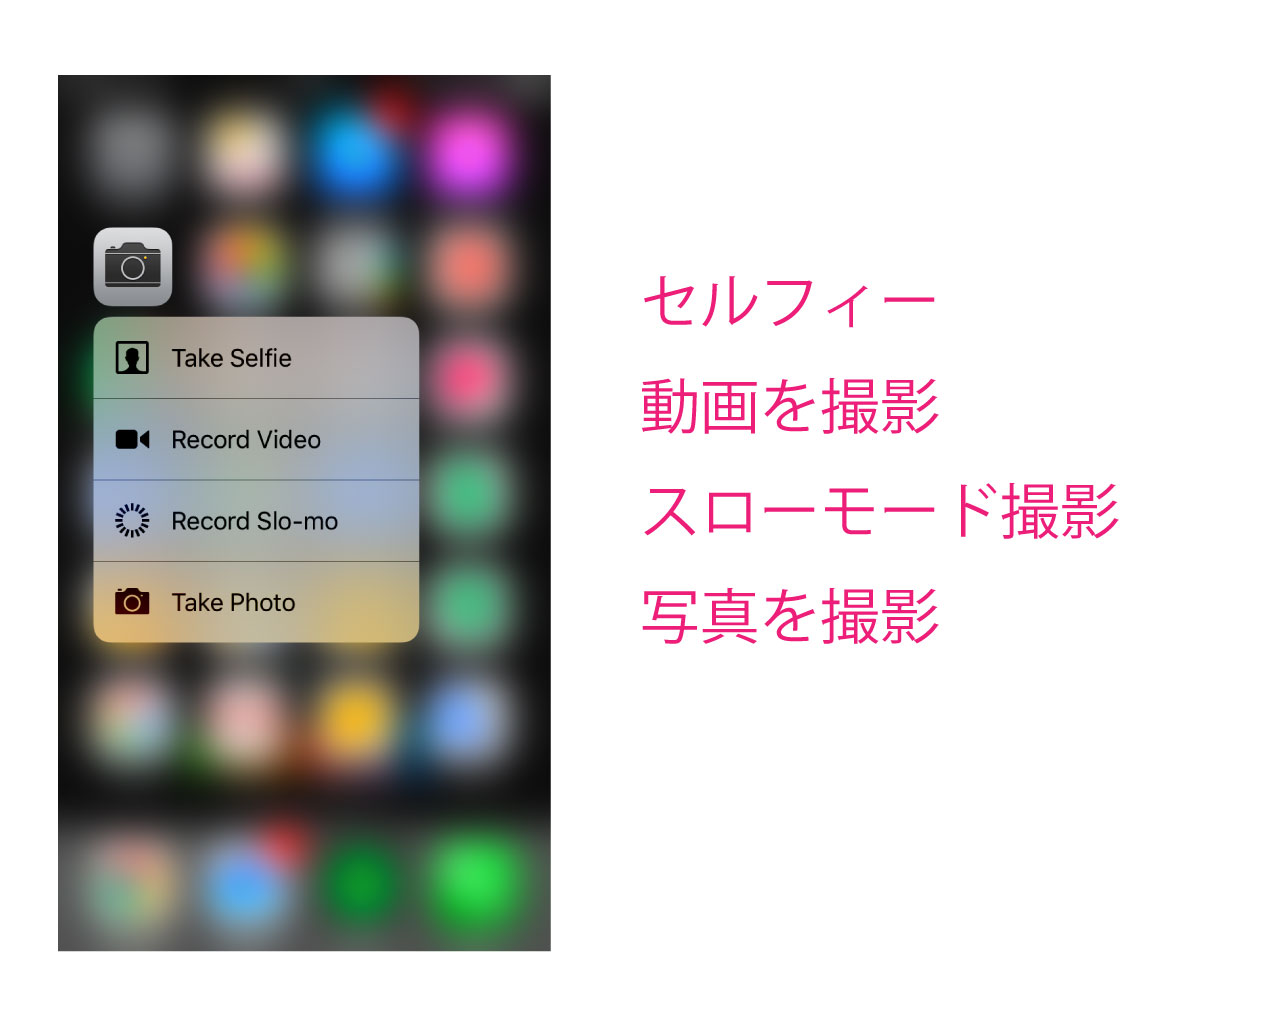 iphone-3dtouch-app-icon-shortcut-memu-8